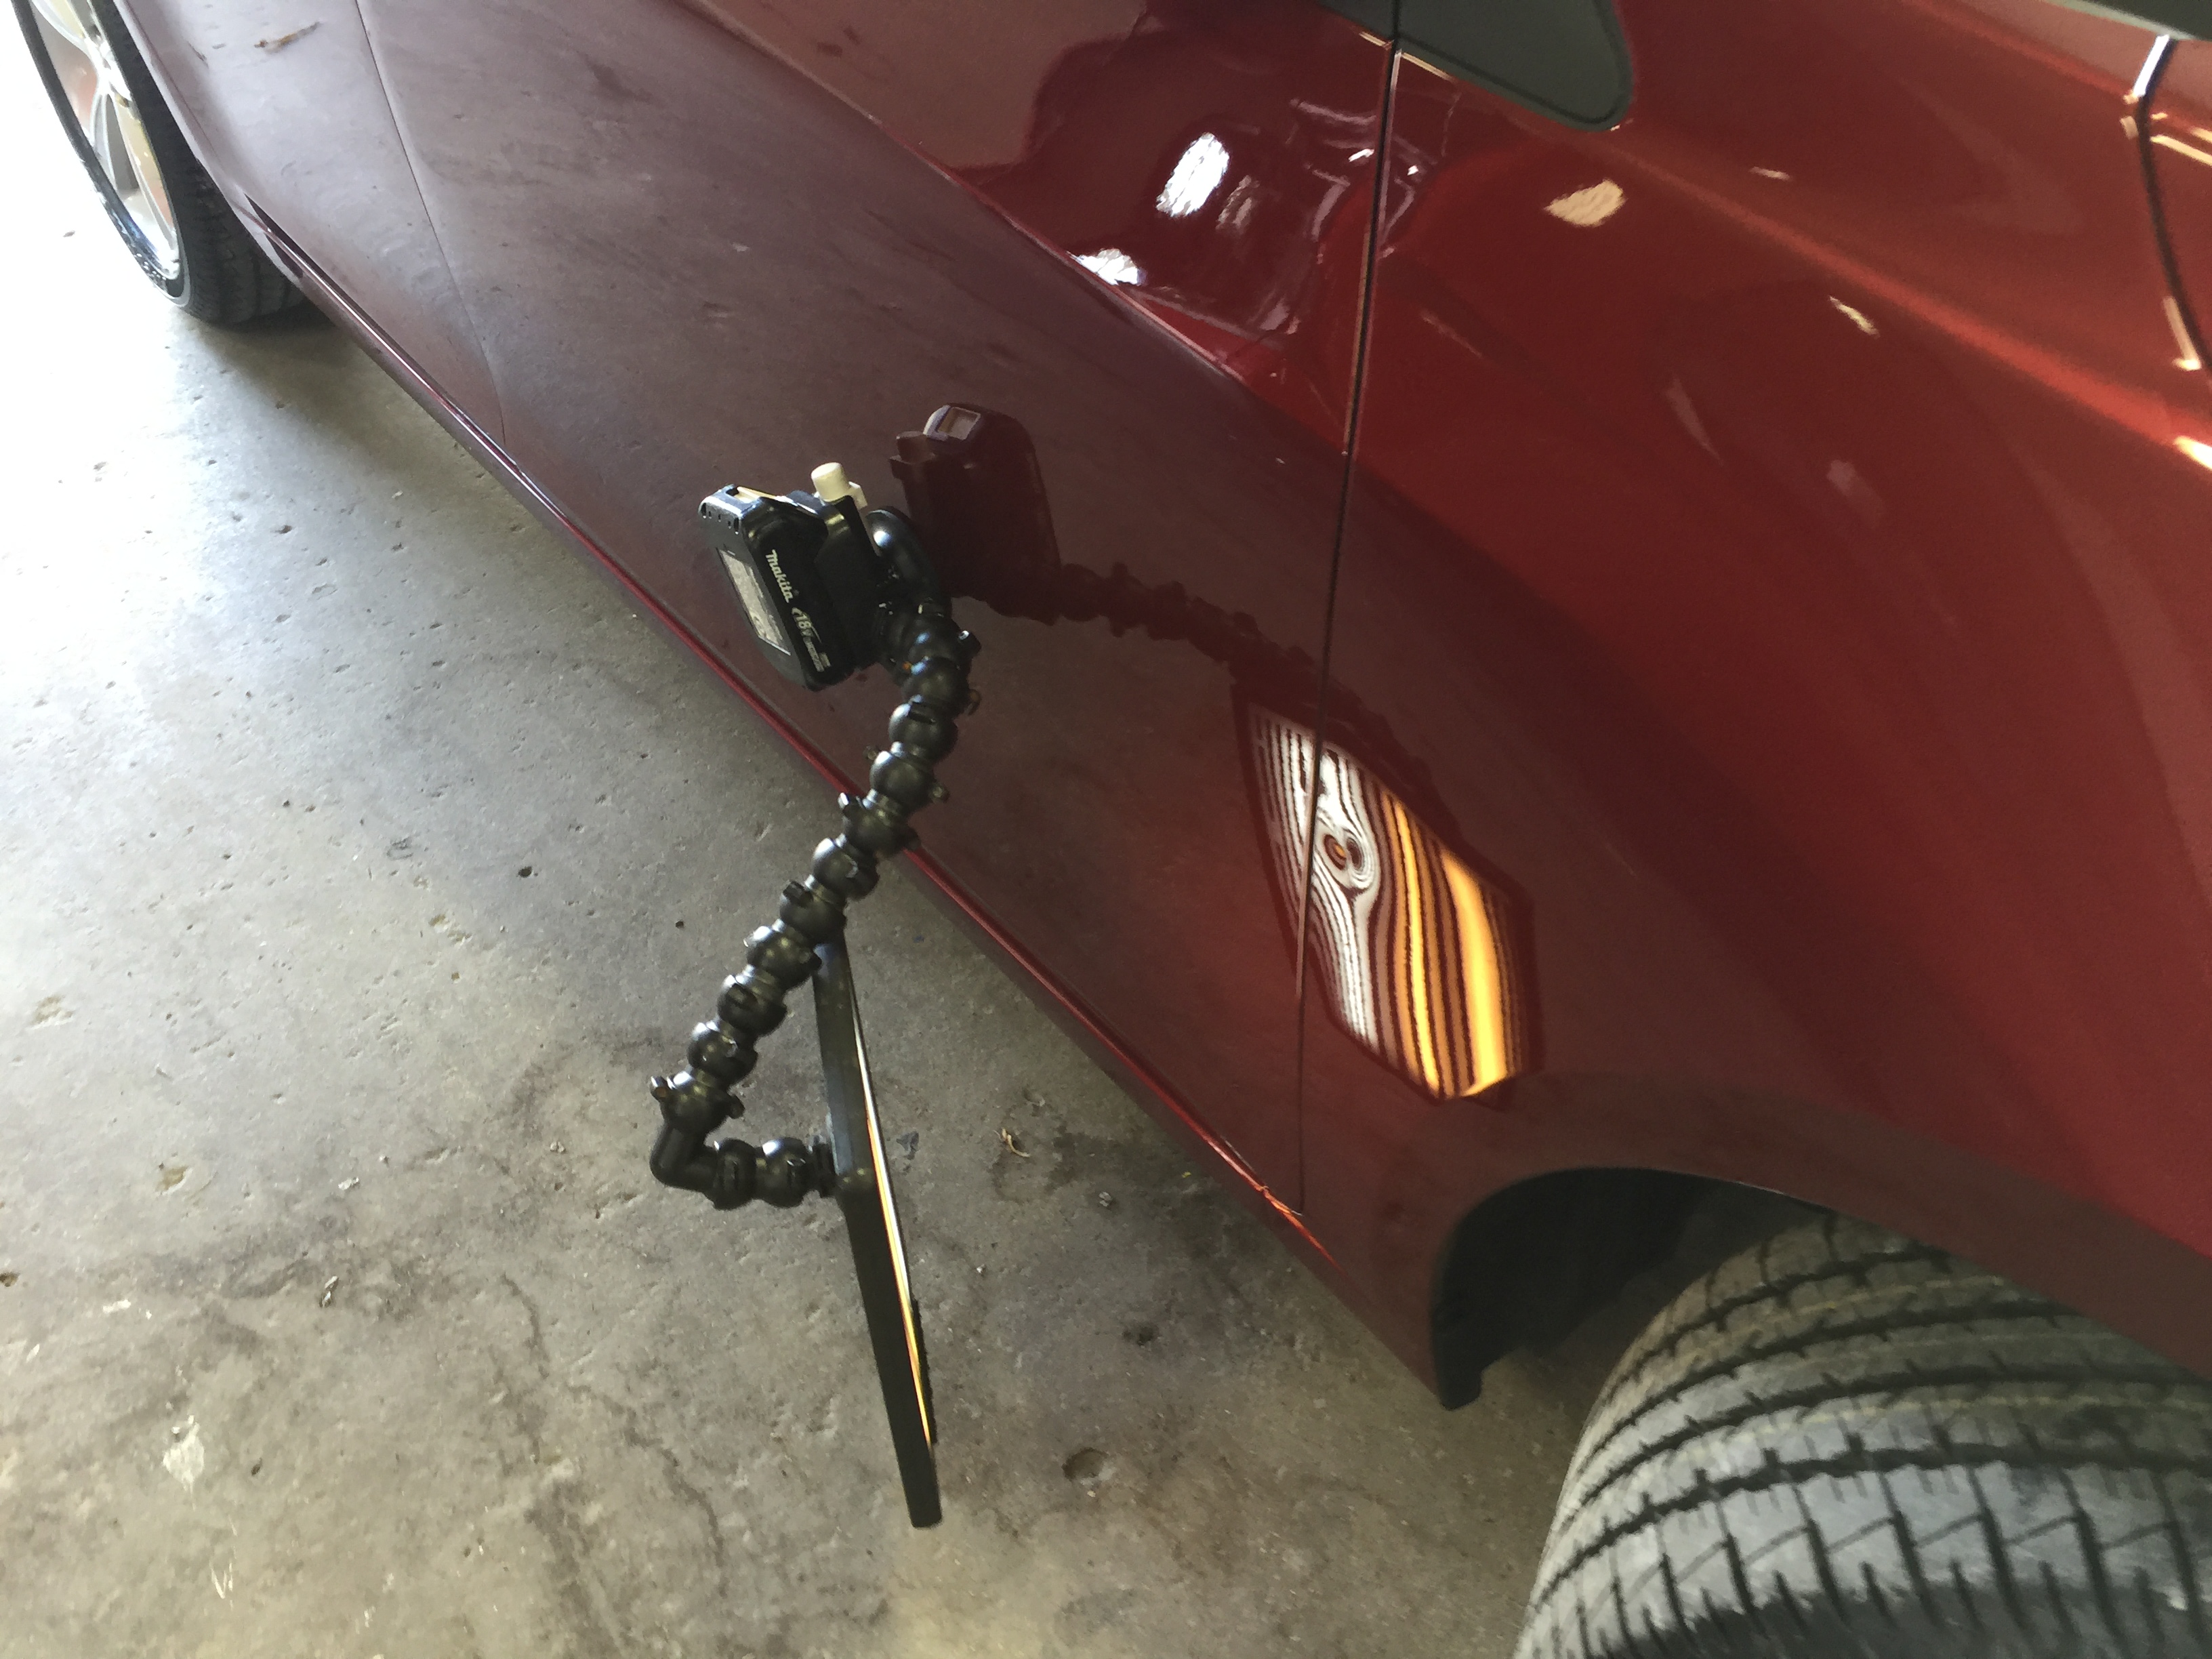 2015 Chevy Cruze, Paintless Dent Removal, Springfield's Mobile Dent Repair Specialist. Passenger Fender Sharp Dent. http://217dent.com